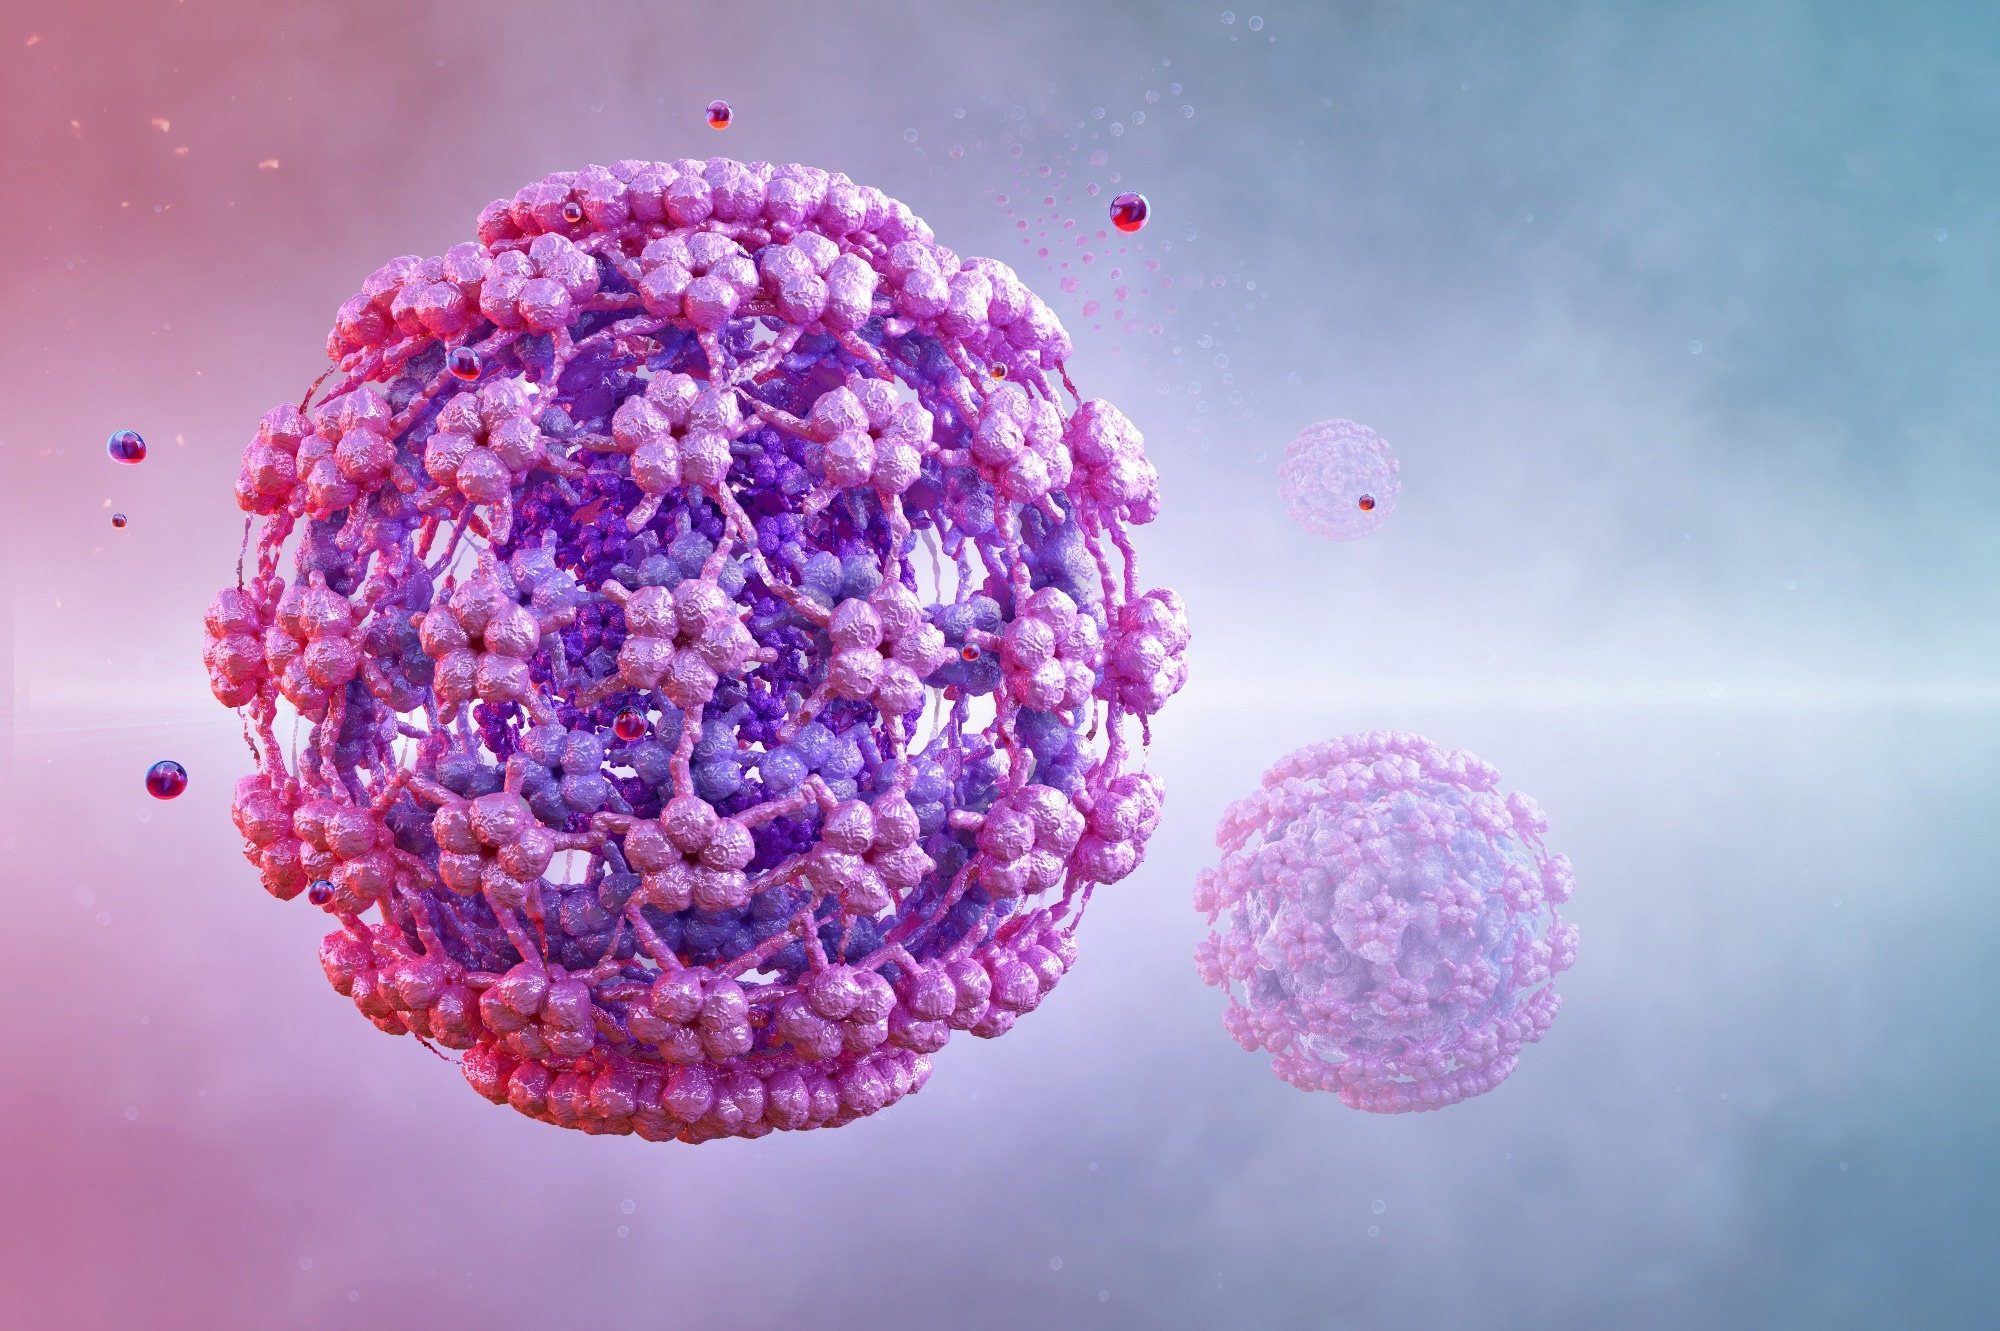 Study: Human papillomavirus and prostate cancer: Systematic review and meta-analysis. Image Credit: Corona Borealis Studio / Shutterstock.com